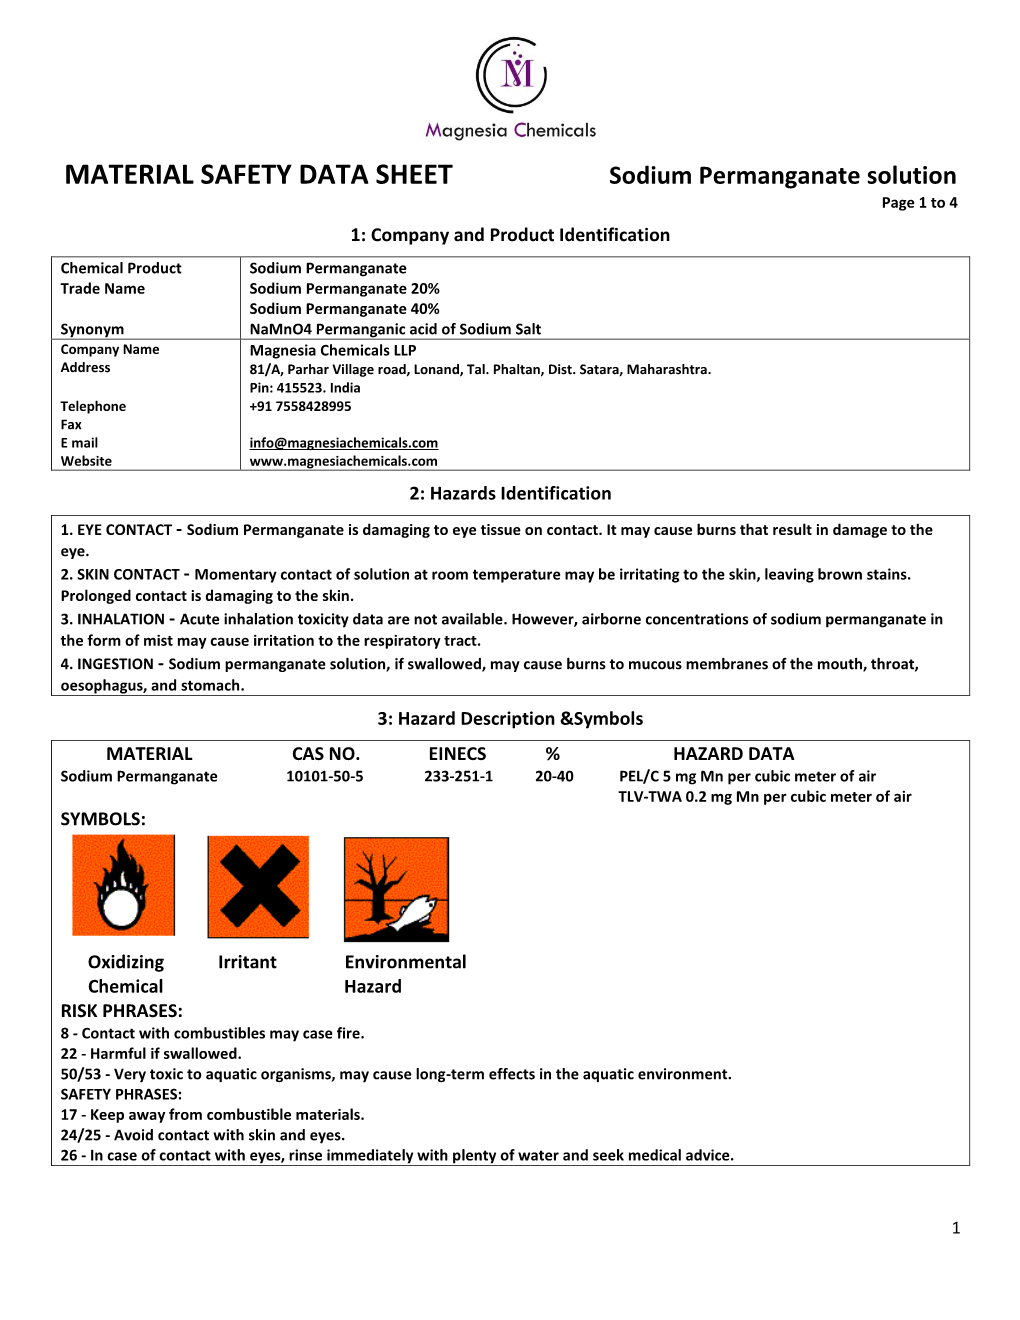 MATERIAL SAFETY DATA SHEET Sodium Permanganate Solution